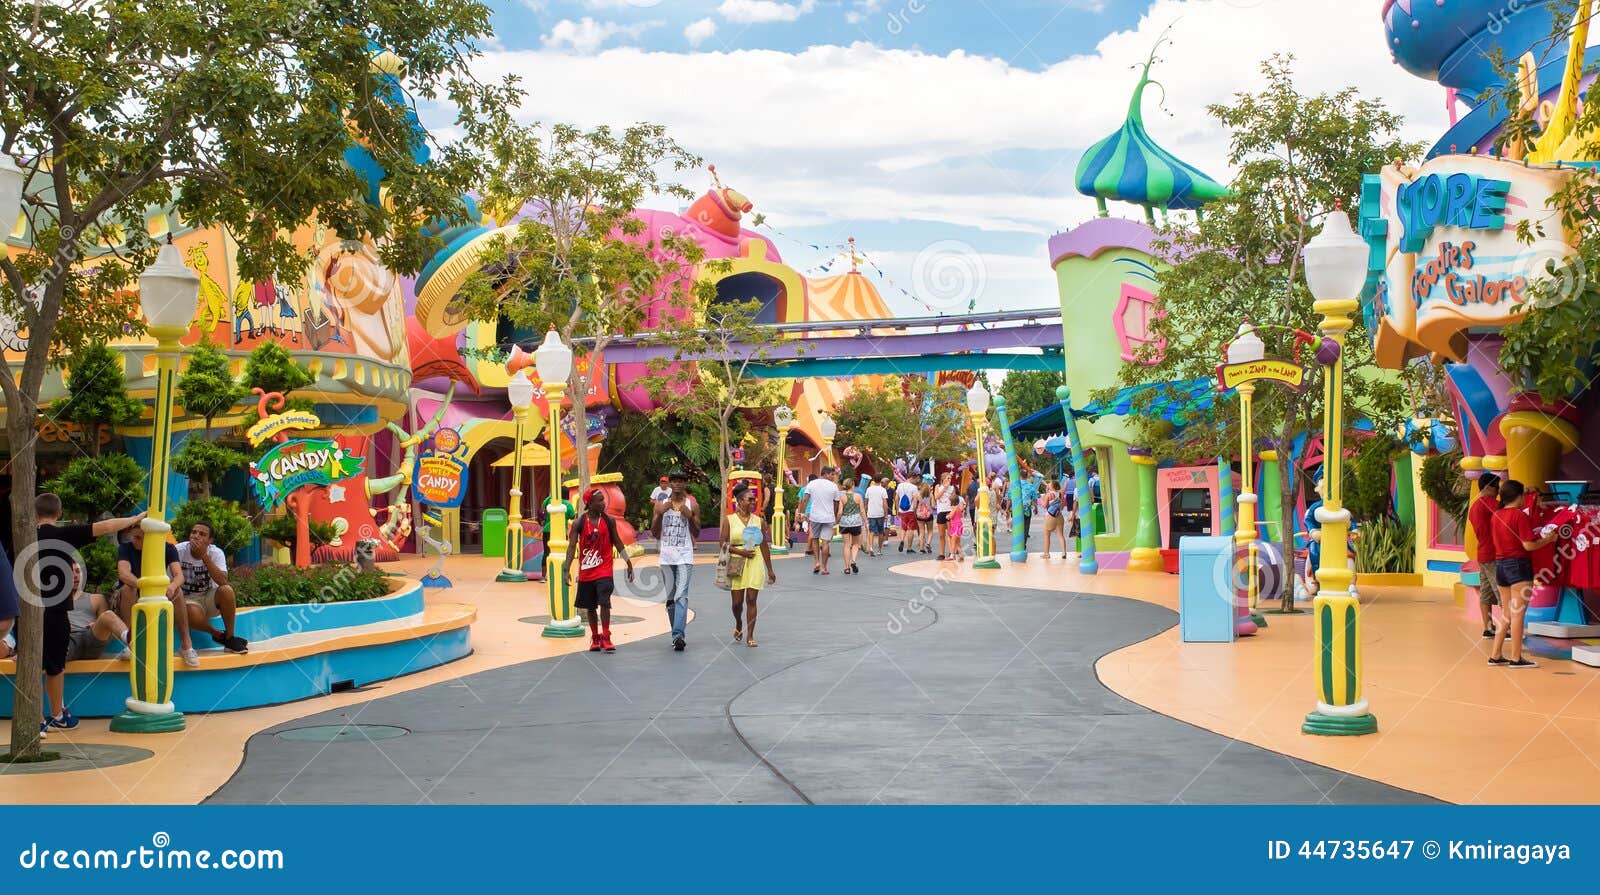 The Seuss Landing Area At Universal Studios Islands Of Adventure